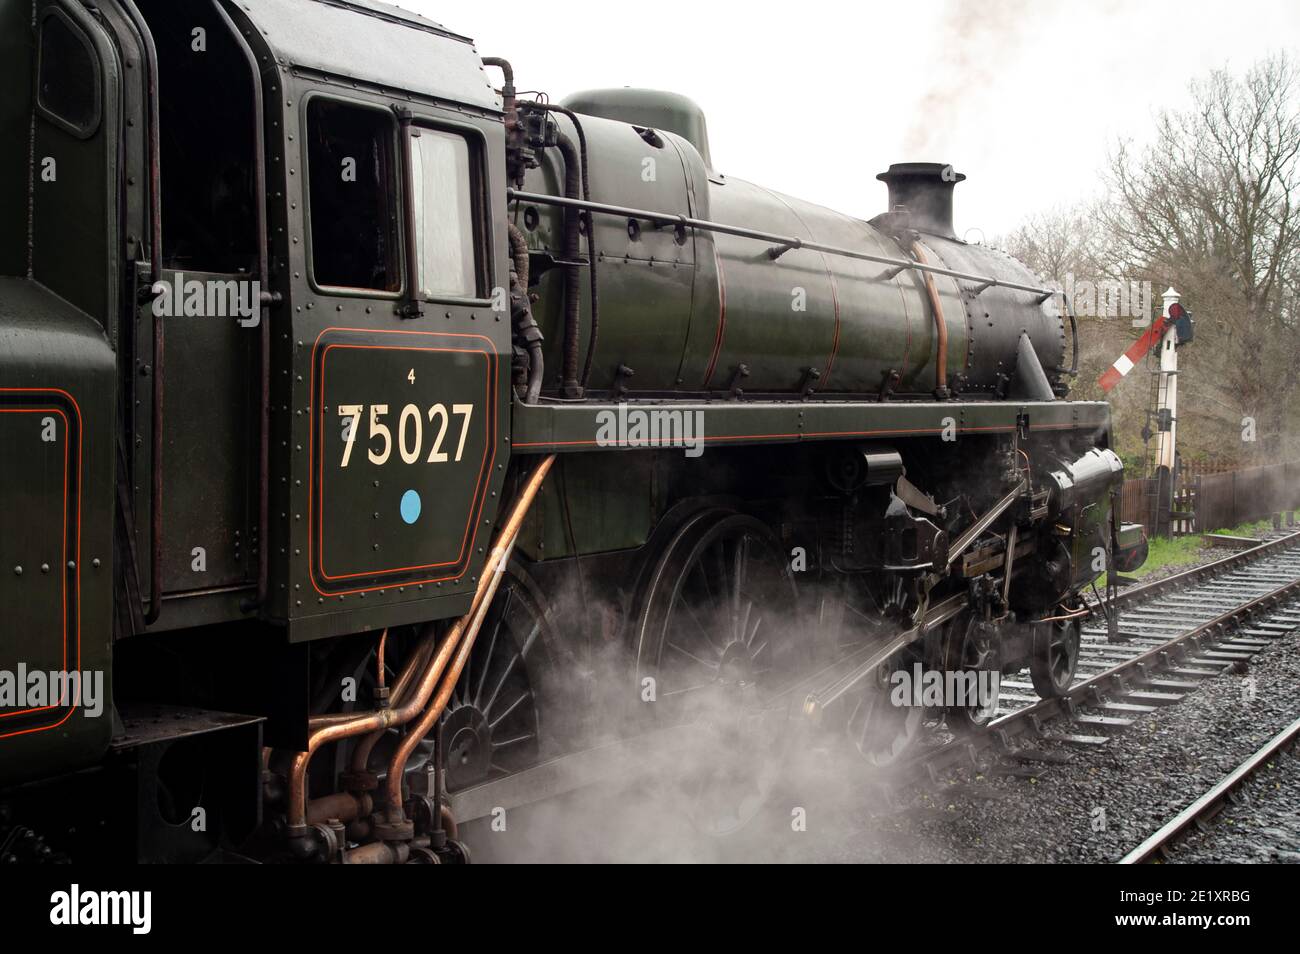 British Railways Standard clase 4 4-6-0 locomotora de vapor N° 75027, tren de vapor en el ferrocarril Blue Bell, Sussex, Reino Unido Foto de stock